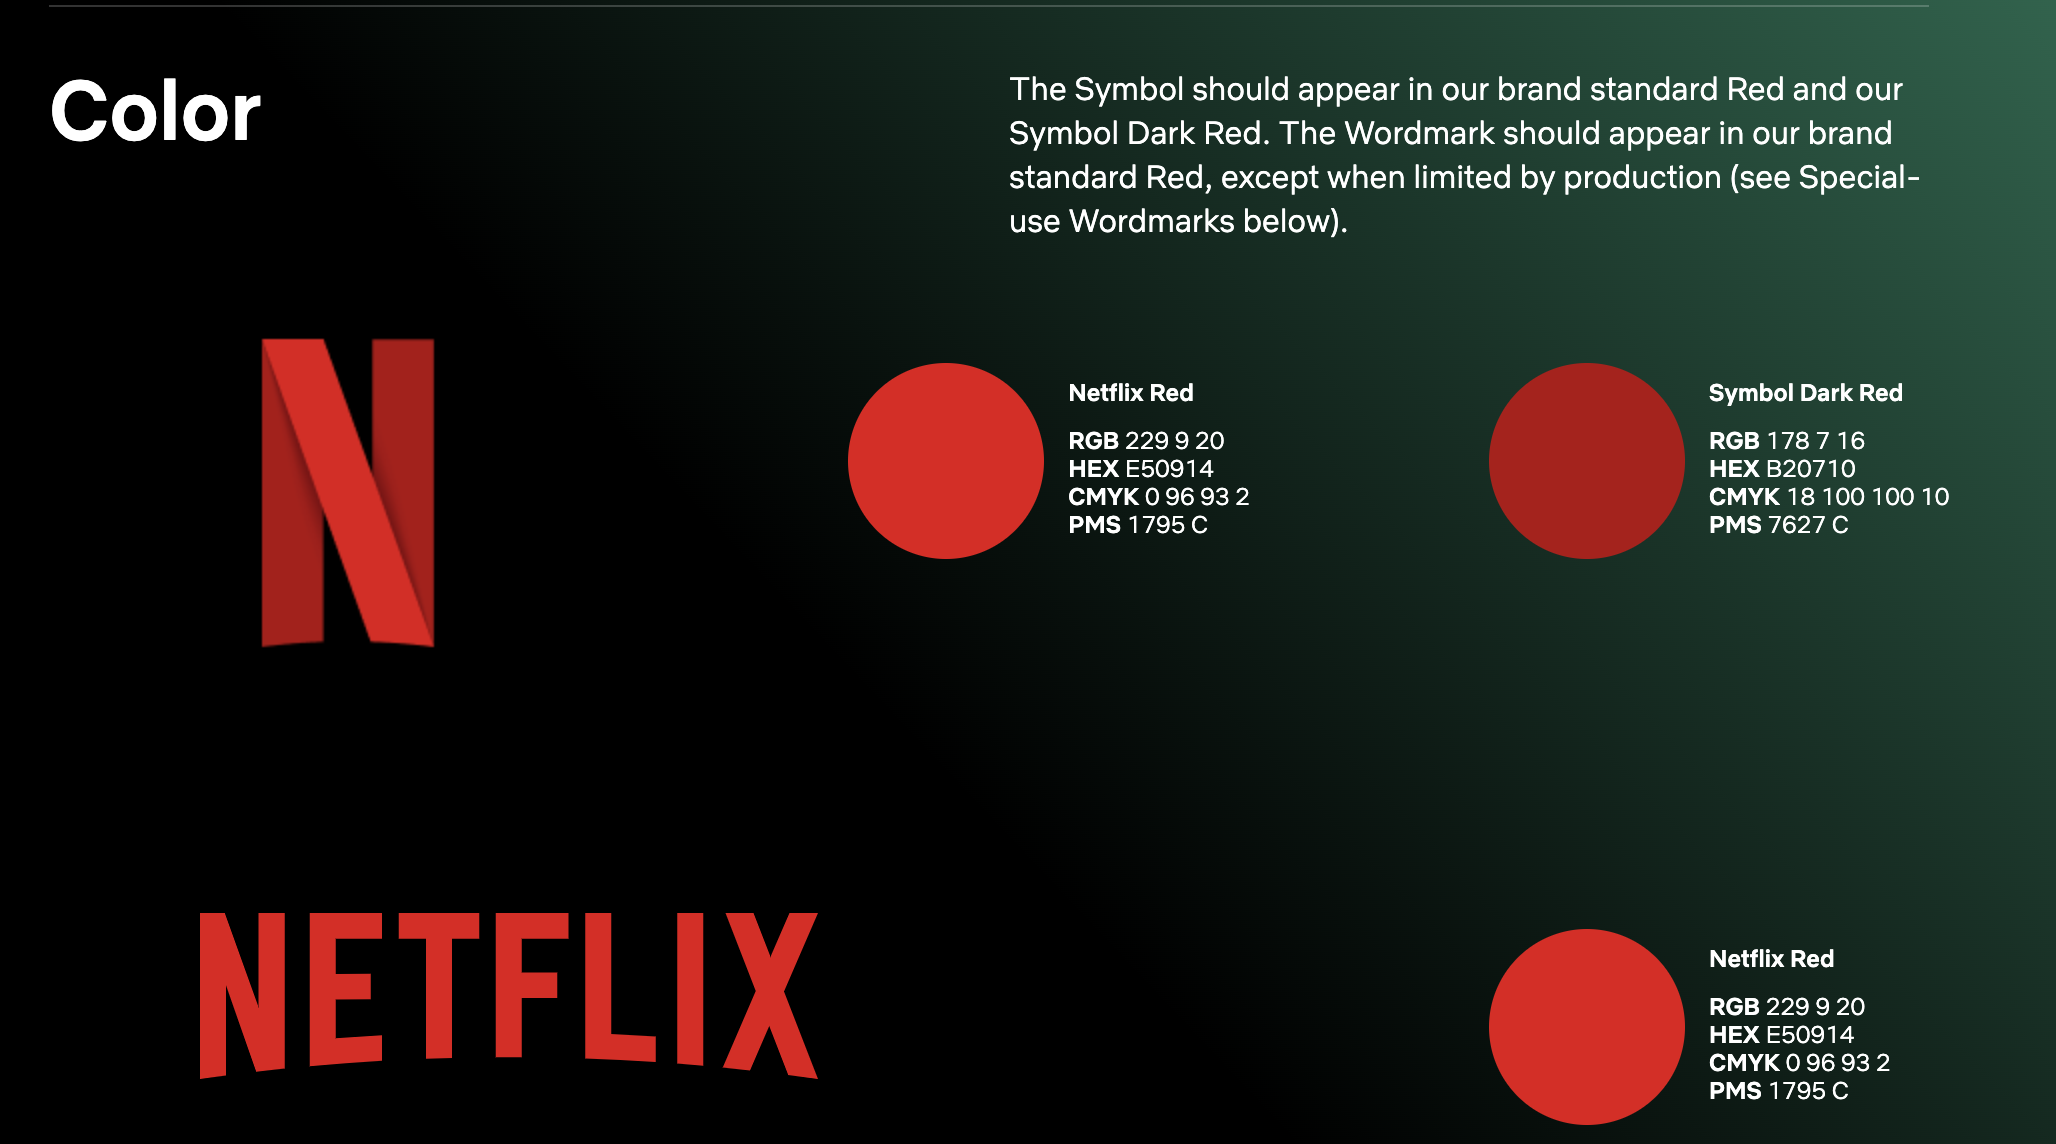 Image source: Netflix brand guidelines